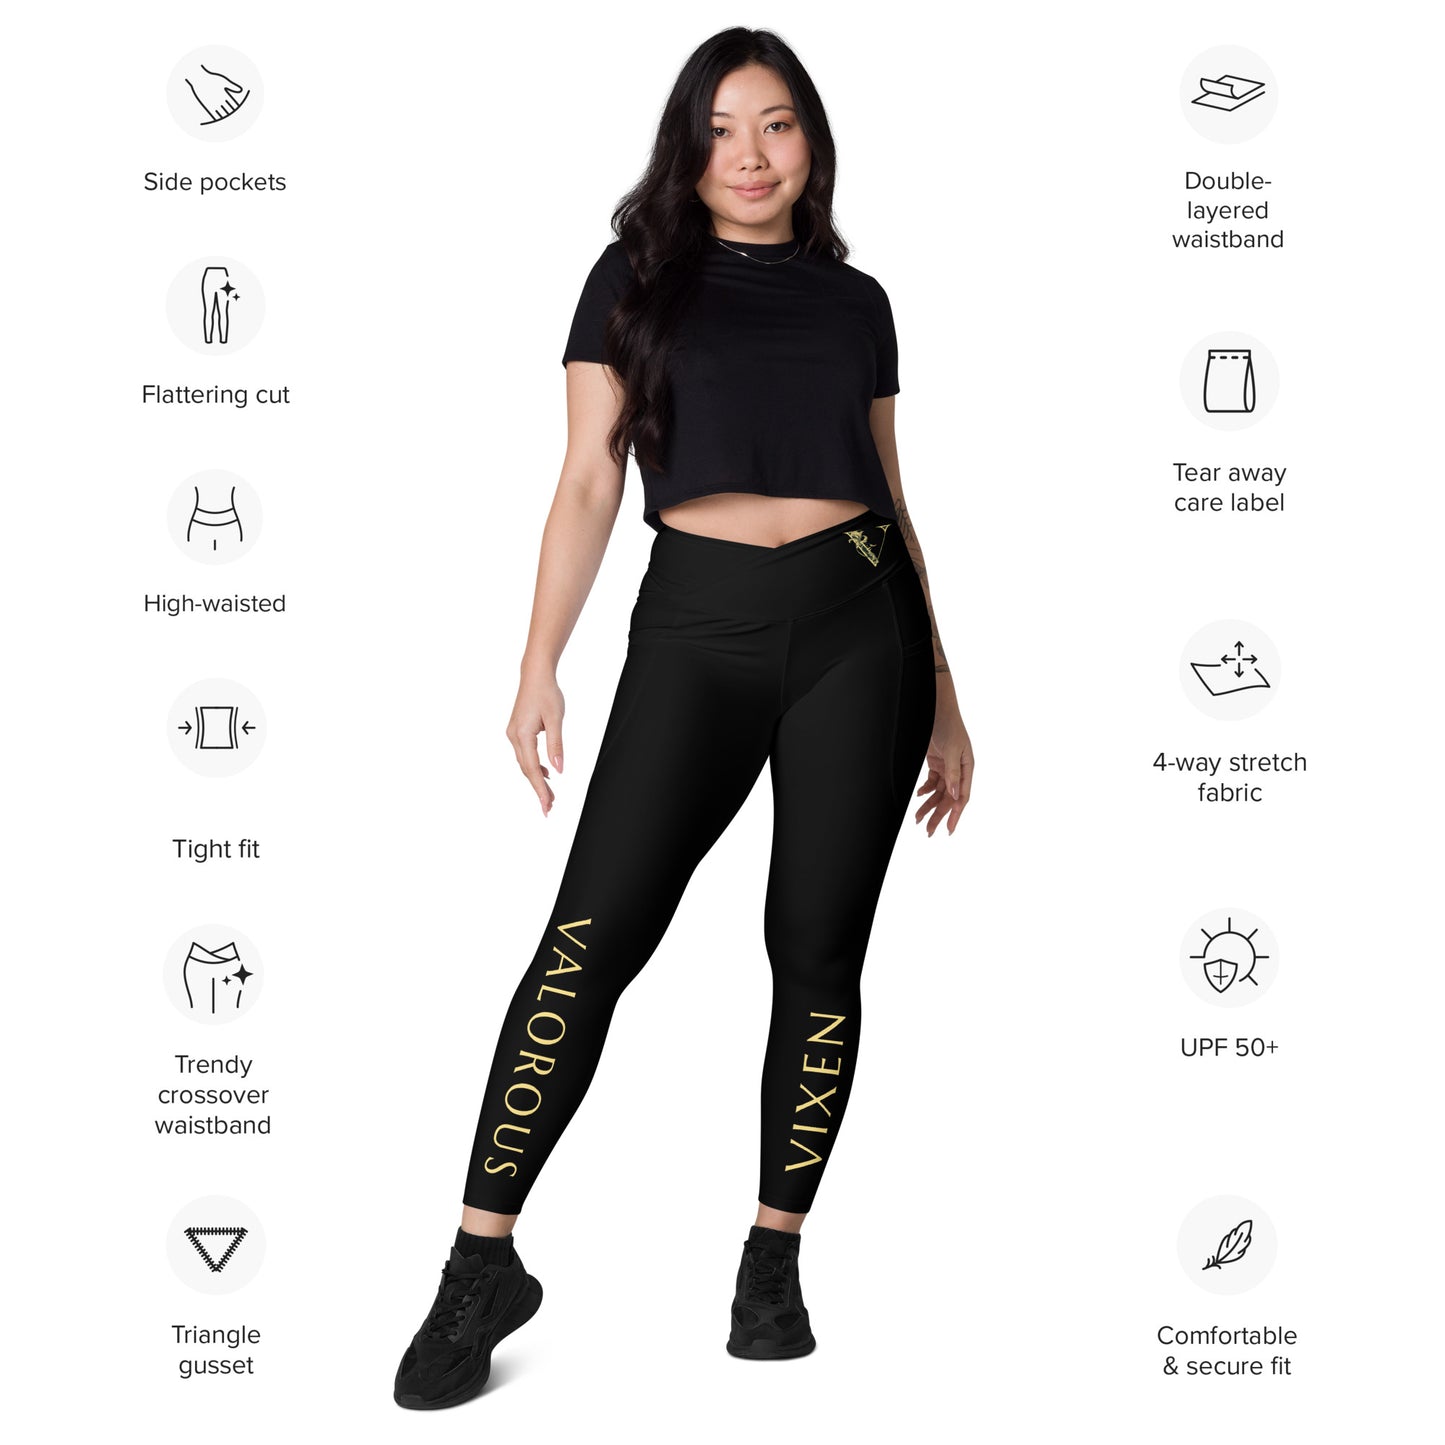 Valorous Vixen Brand - Crossover leggings with pockets